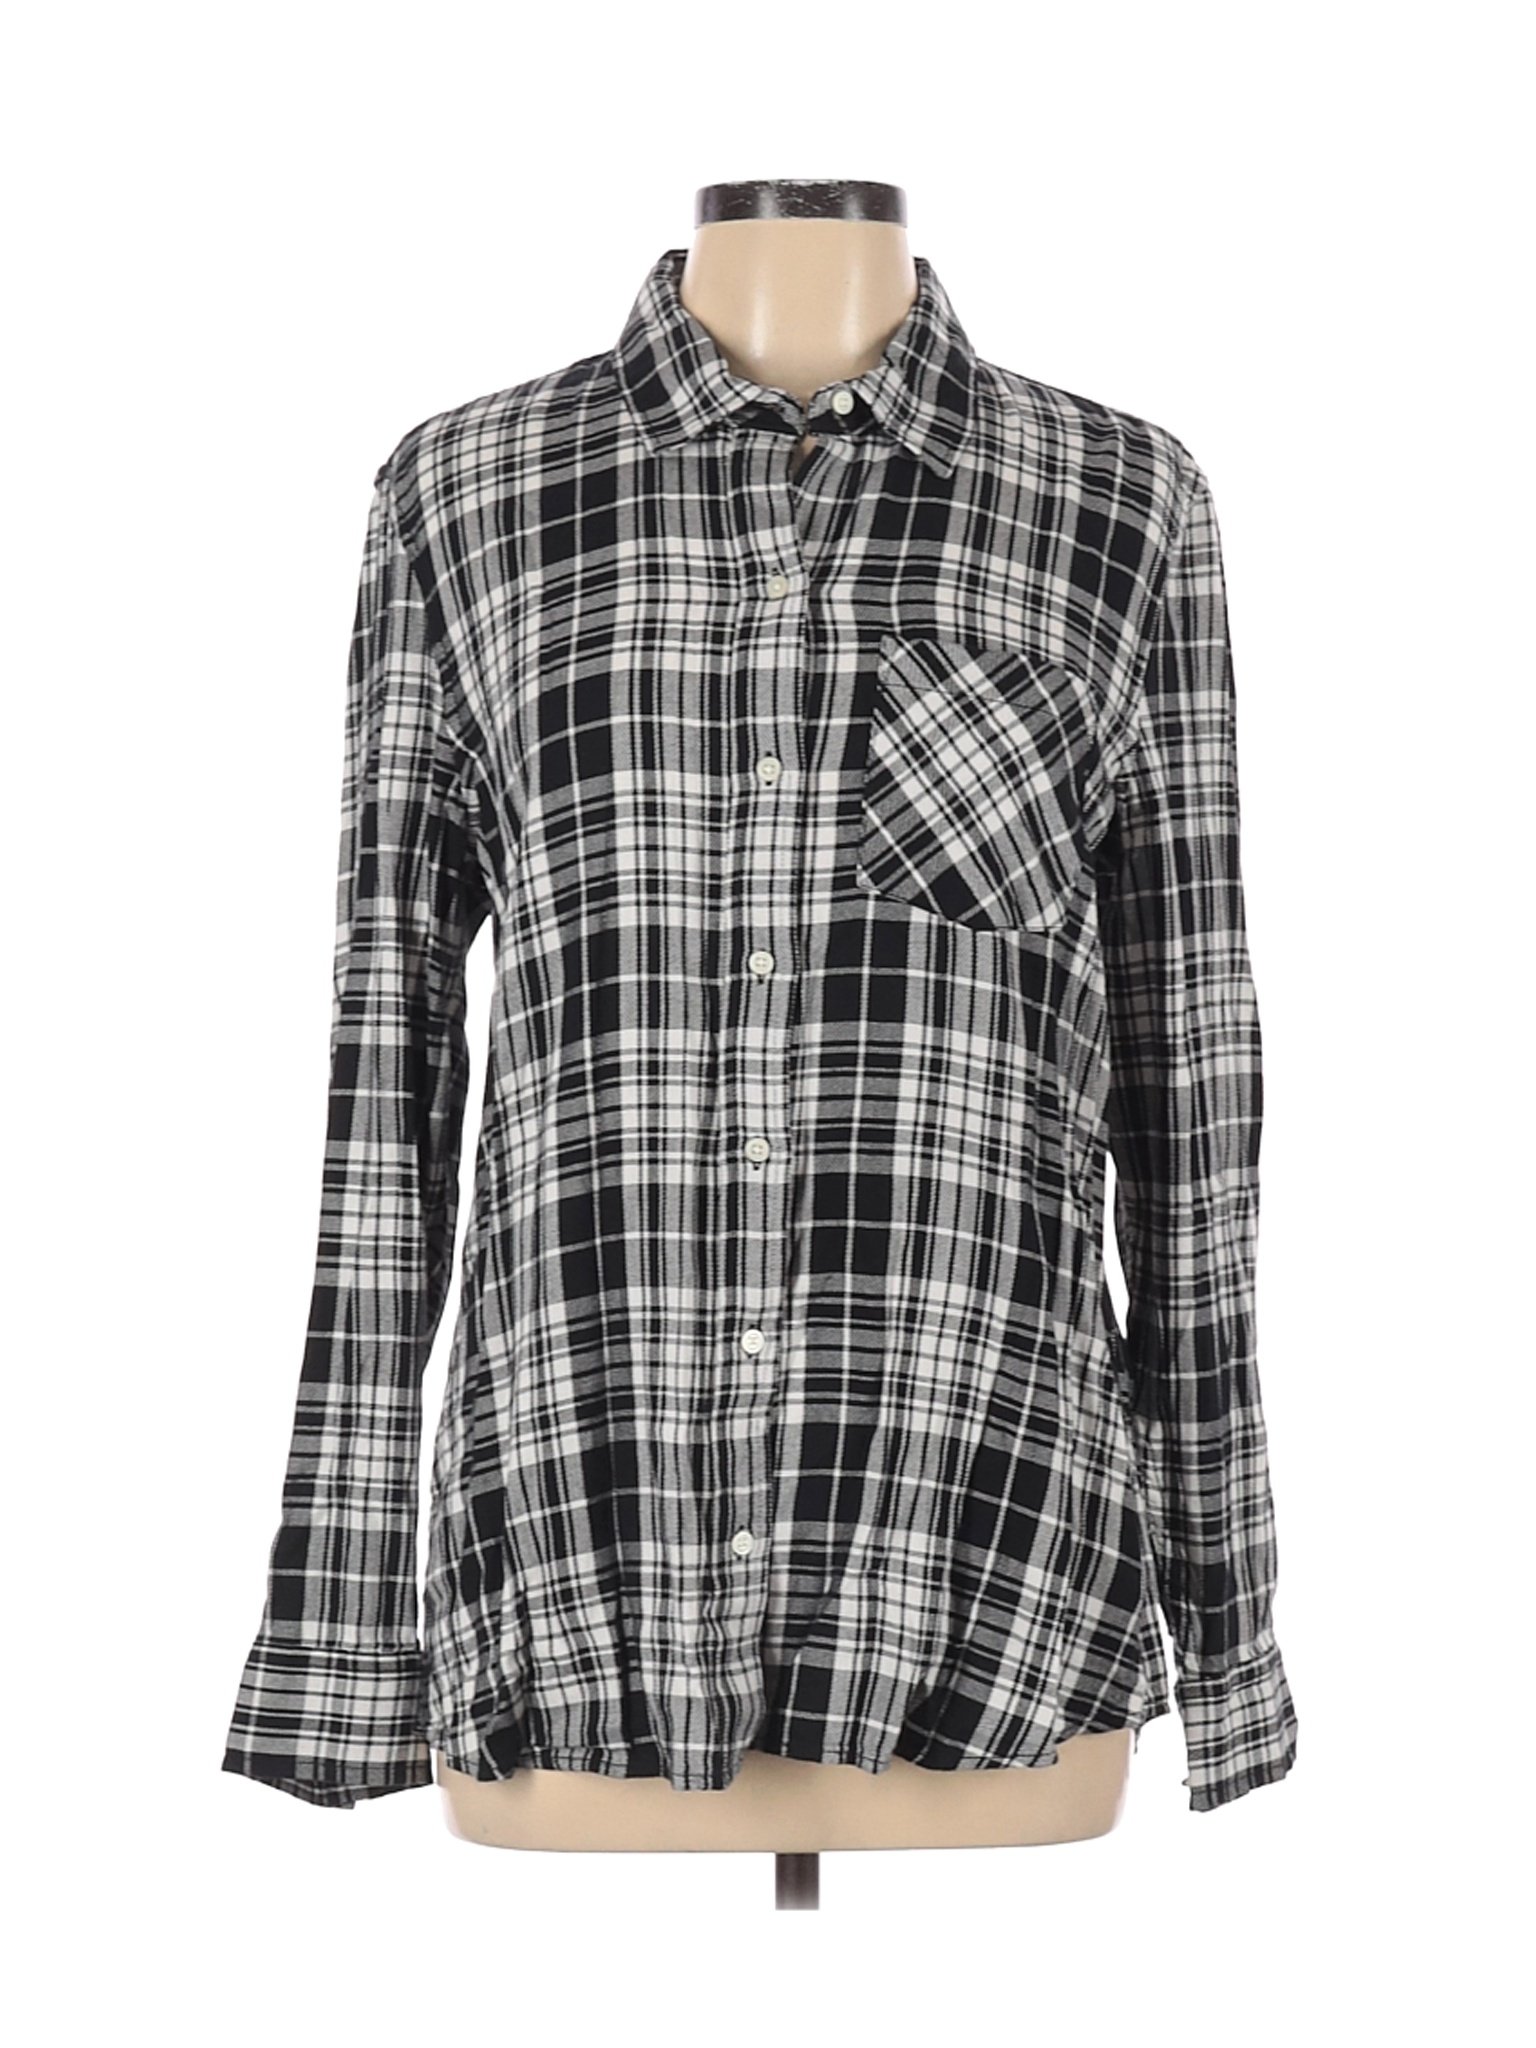 NWT Gap Women Black Long Sleeve Button-Down Shirt L | eBay